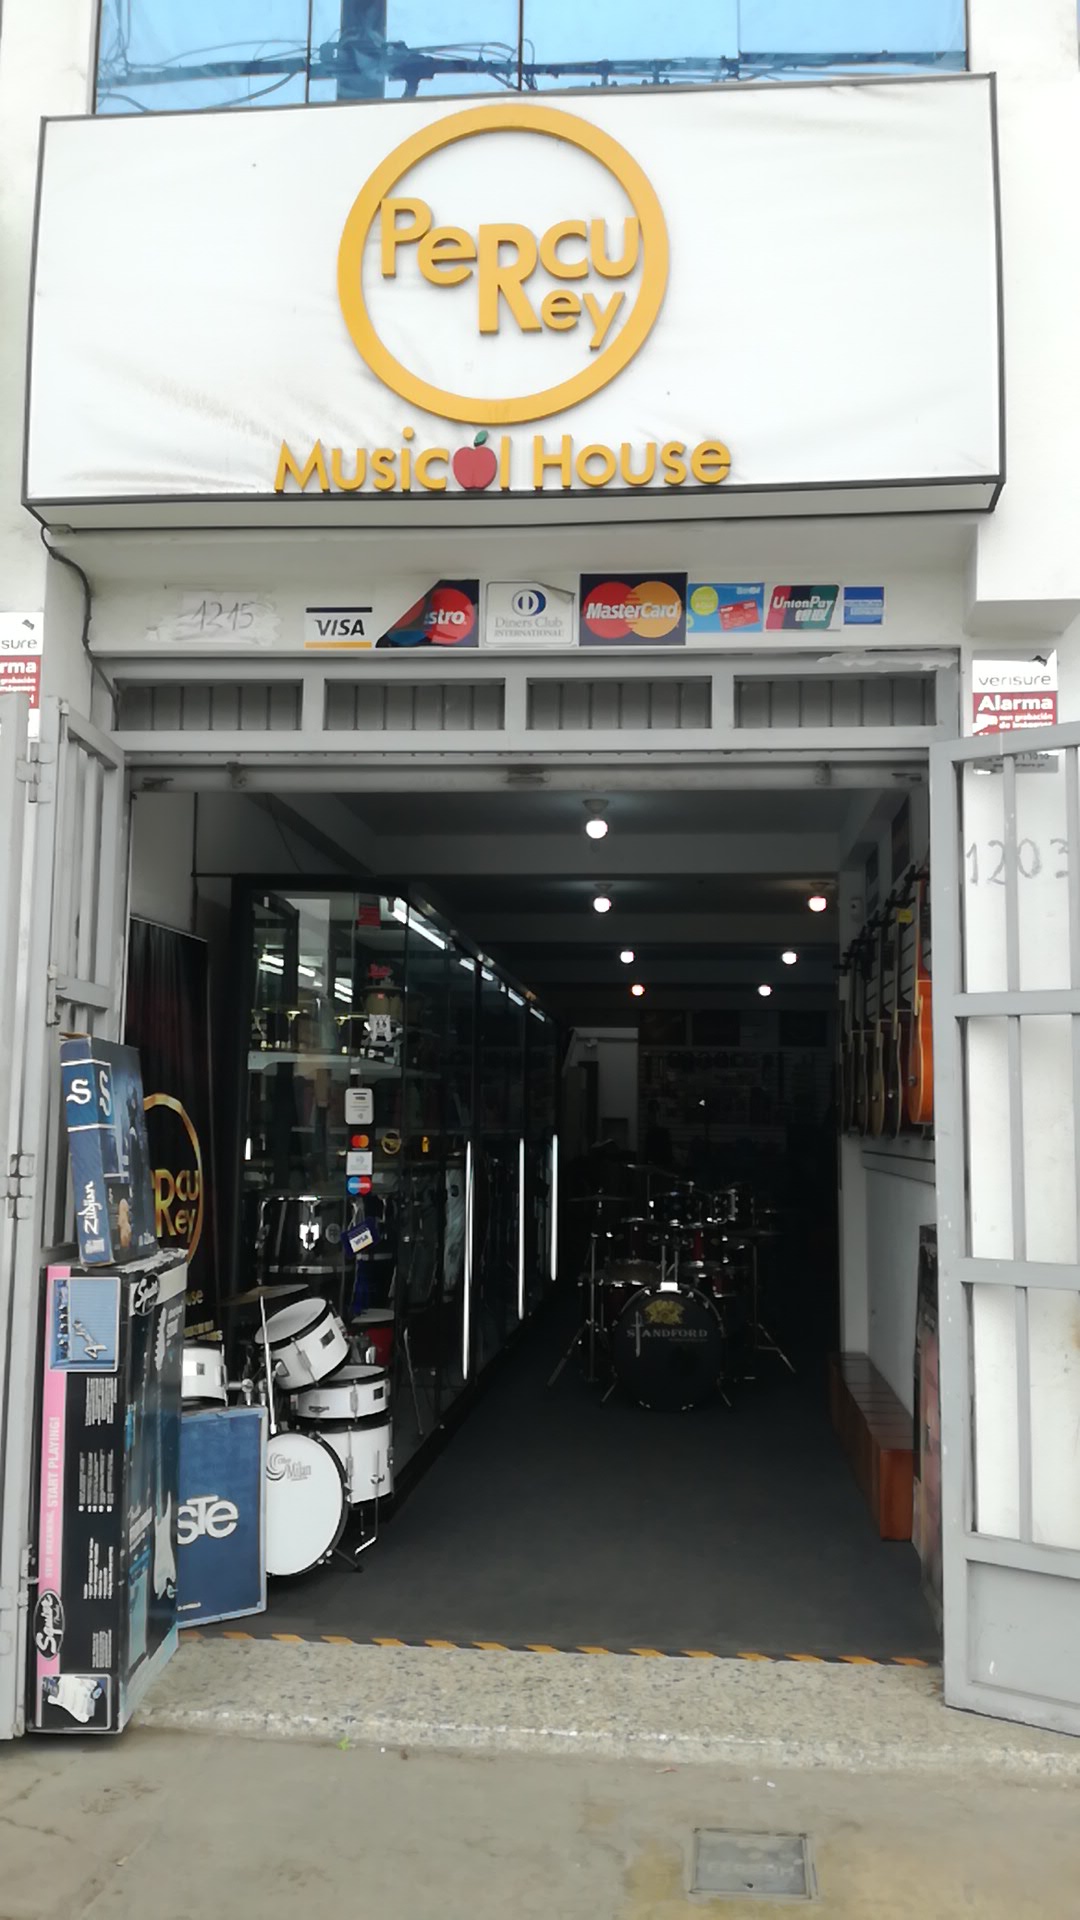 Percurey Musical House